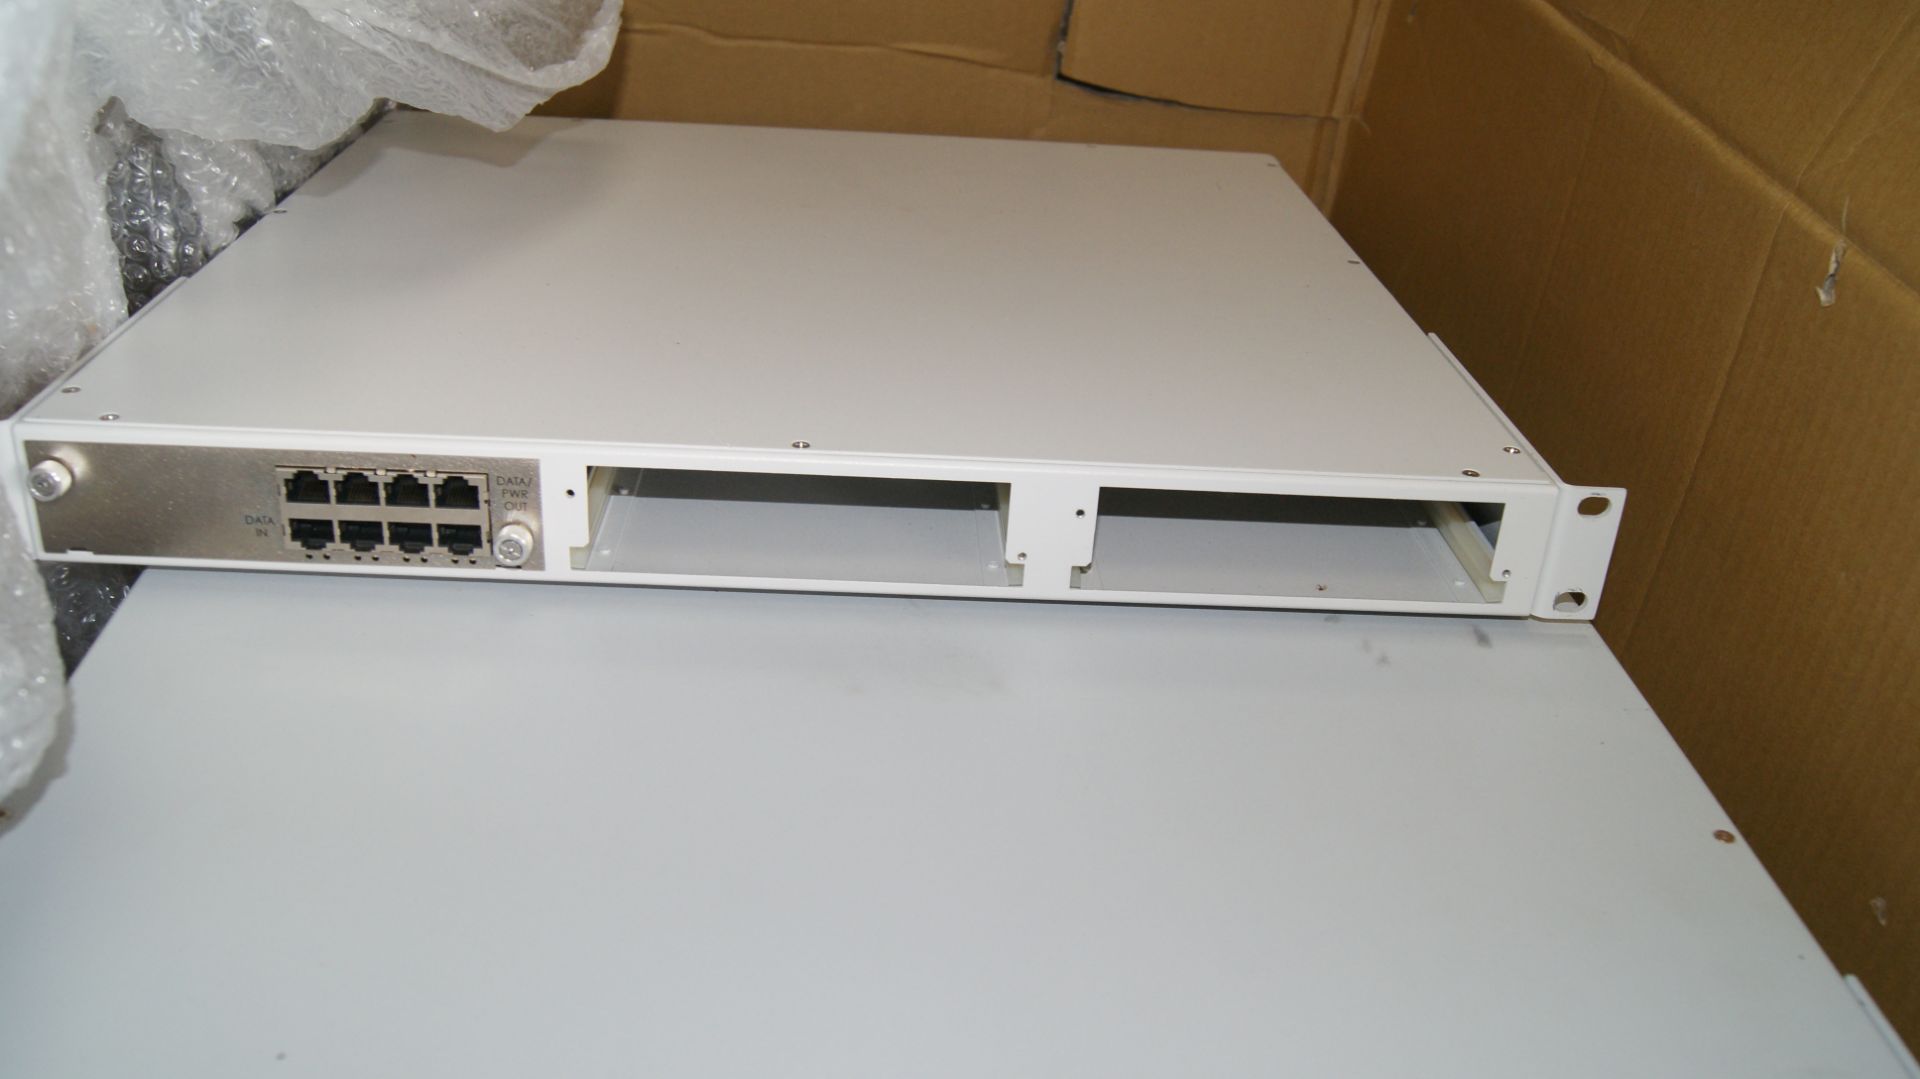 PANASONIC NC-24C X 80 - 7 X HONEYWELL HJC5000 CCTV CONTROLLERS - Image 2 of 2